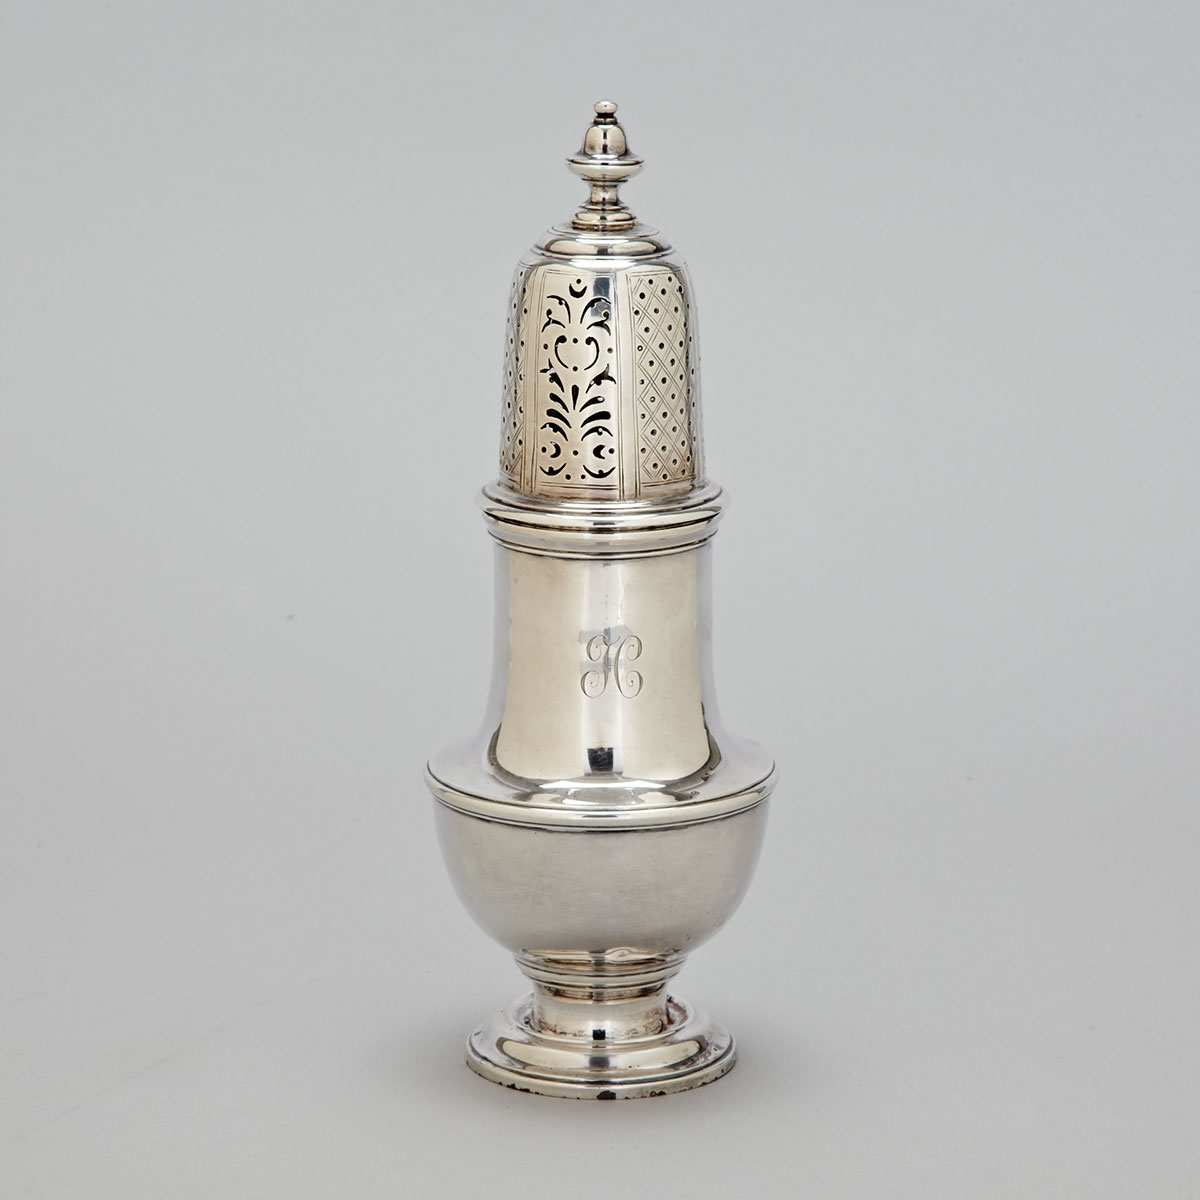 English Silver Sugar Caster, Goldsmiths & Silversmiths Co., London, 1917